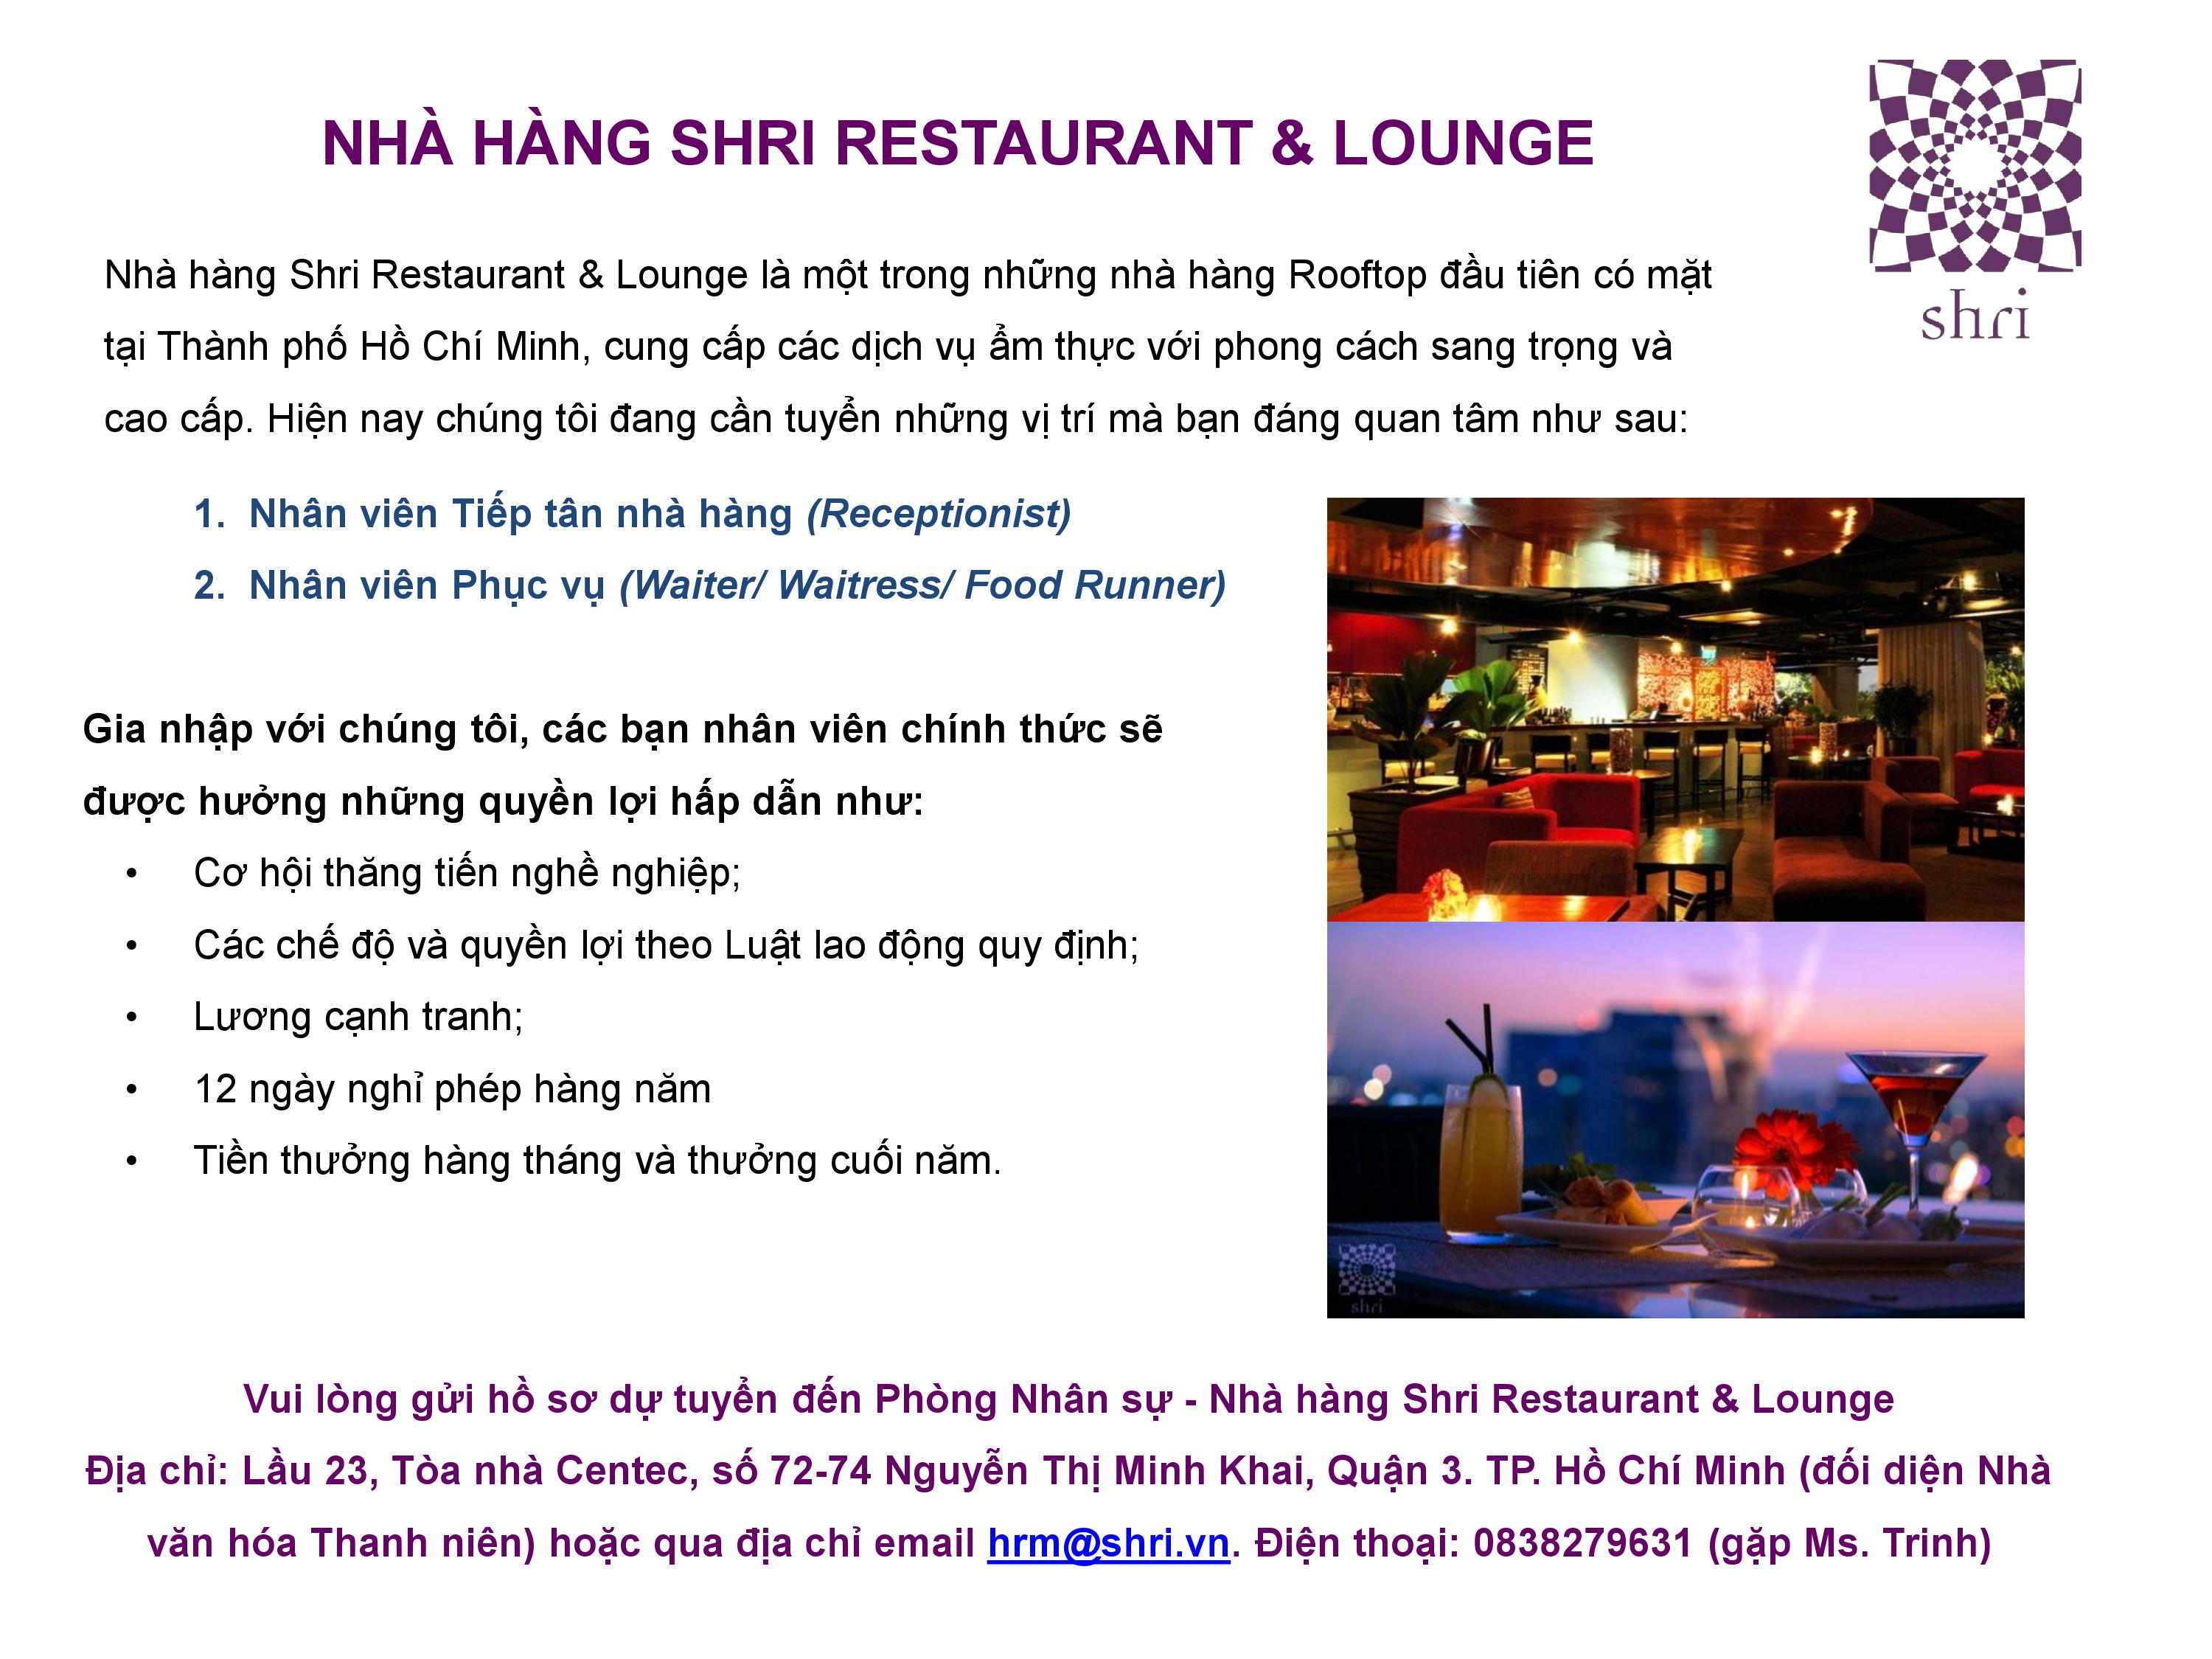 Shri Restaurant & Lounge tuyển dụng 2